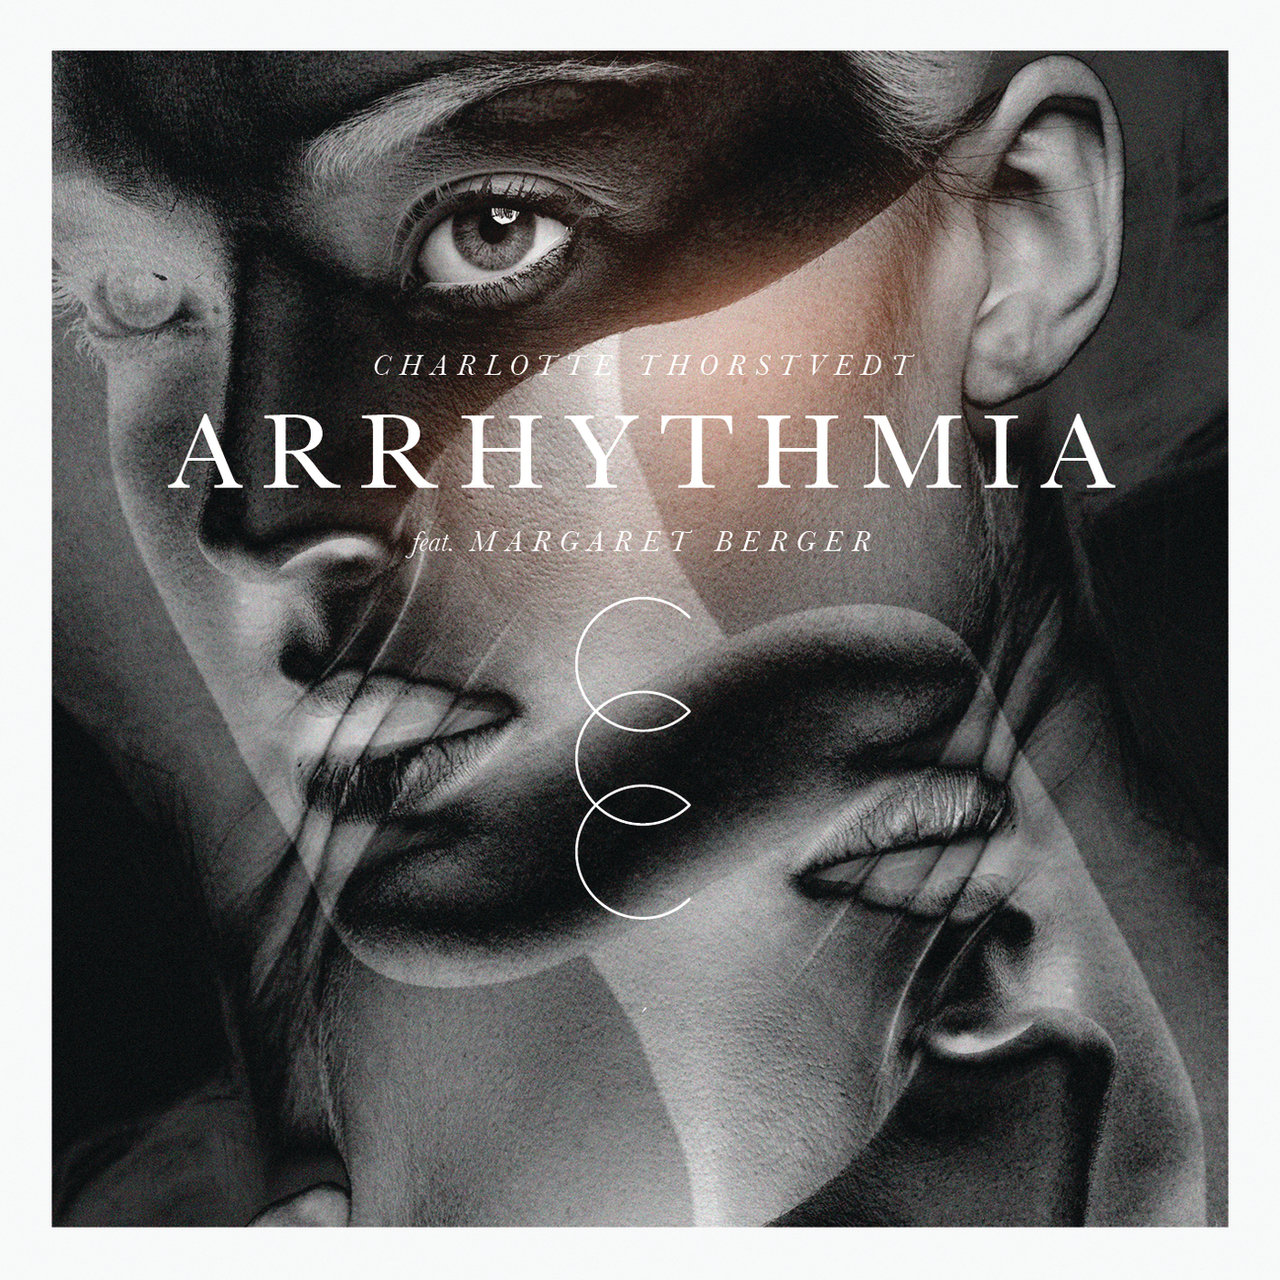 Charlotte Thorstvedt featuring Margaret Berger — Arrhythmia cover artwork